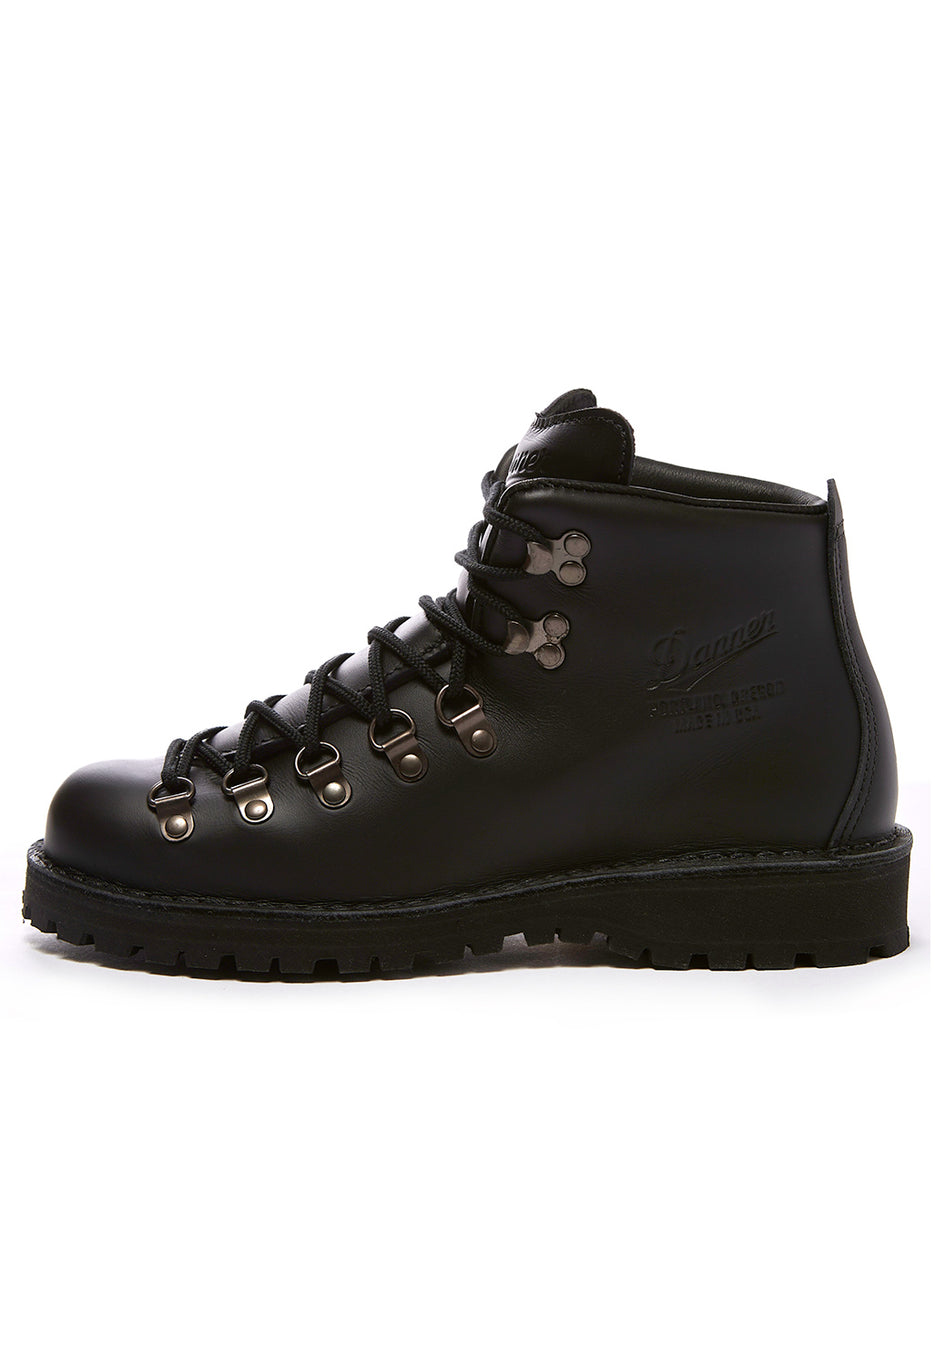 Scarpa Trek LV GORE-TEX Women's Boots - Brown – Outsiders Store UK